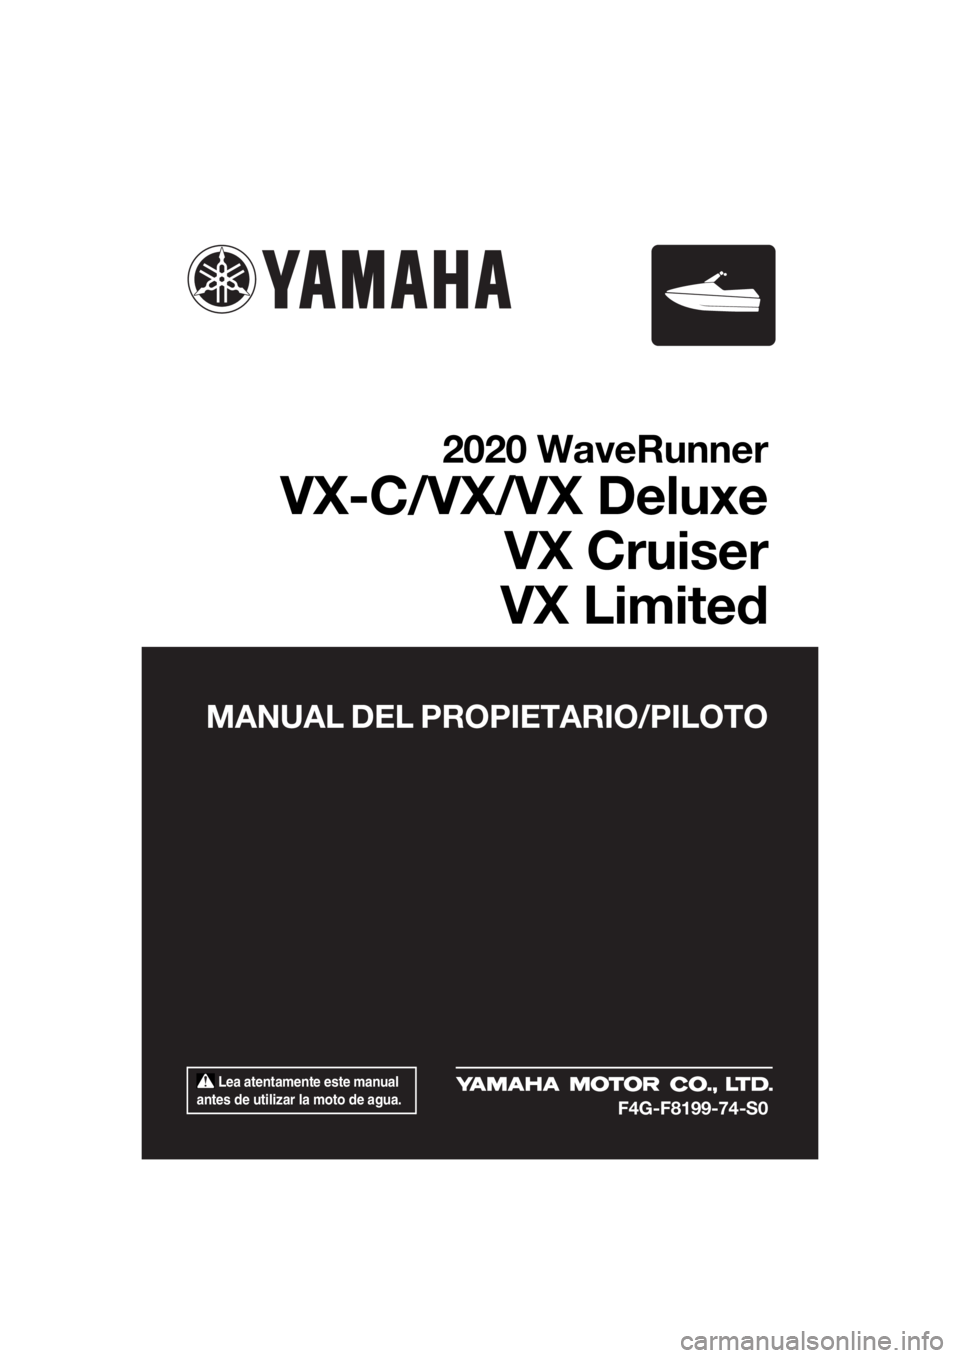 YAMAHA VX-C 2020  Manuale de Empleo (in Spanish)  Lea atentamente este manual 
antes de utilizar la moto de agua.
MANUAL DEL PROPIETARIO/PILOTO
2020 WaveRunner
VX-C/VX/VX Deluxe
VX Cruiser
VX Limited
F4G-F8199-74-S0
UF4G74S0.book  Page 1  Monday, Ju